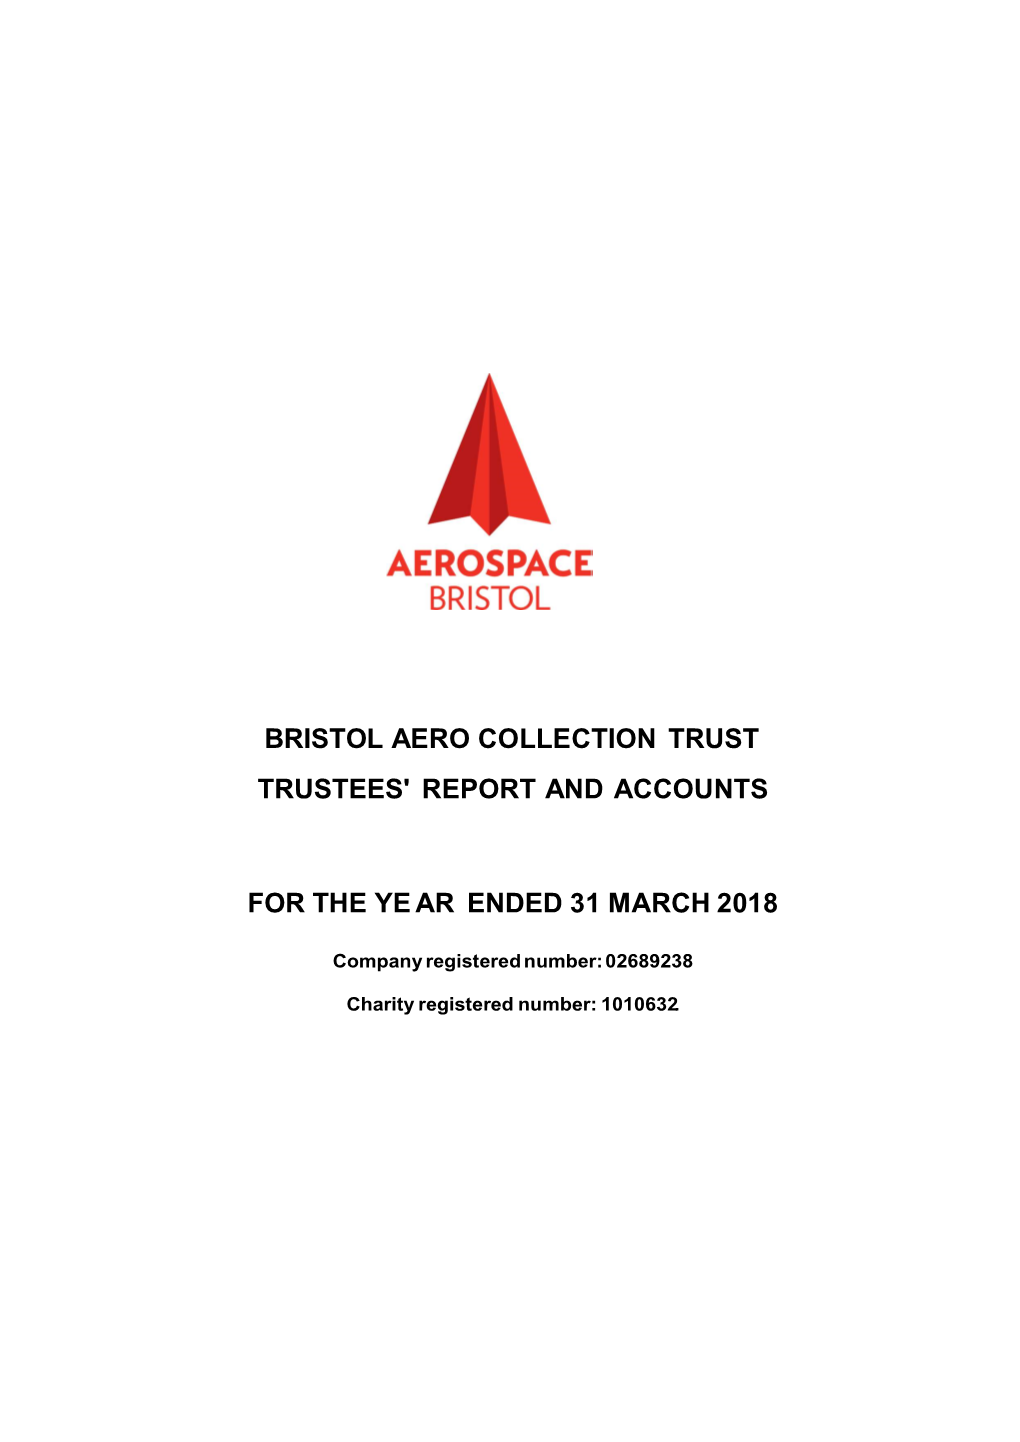 Bristol Aero Collection Trust Trustees' Report and Accounts